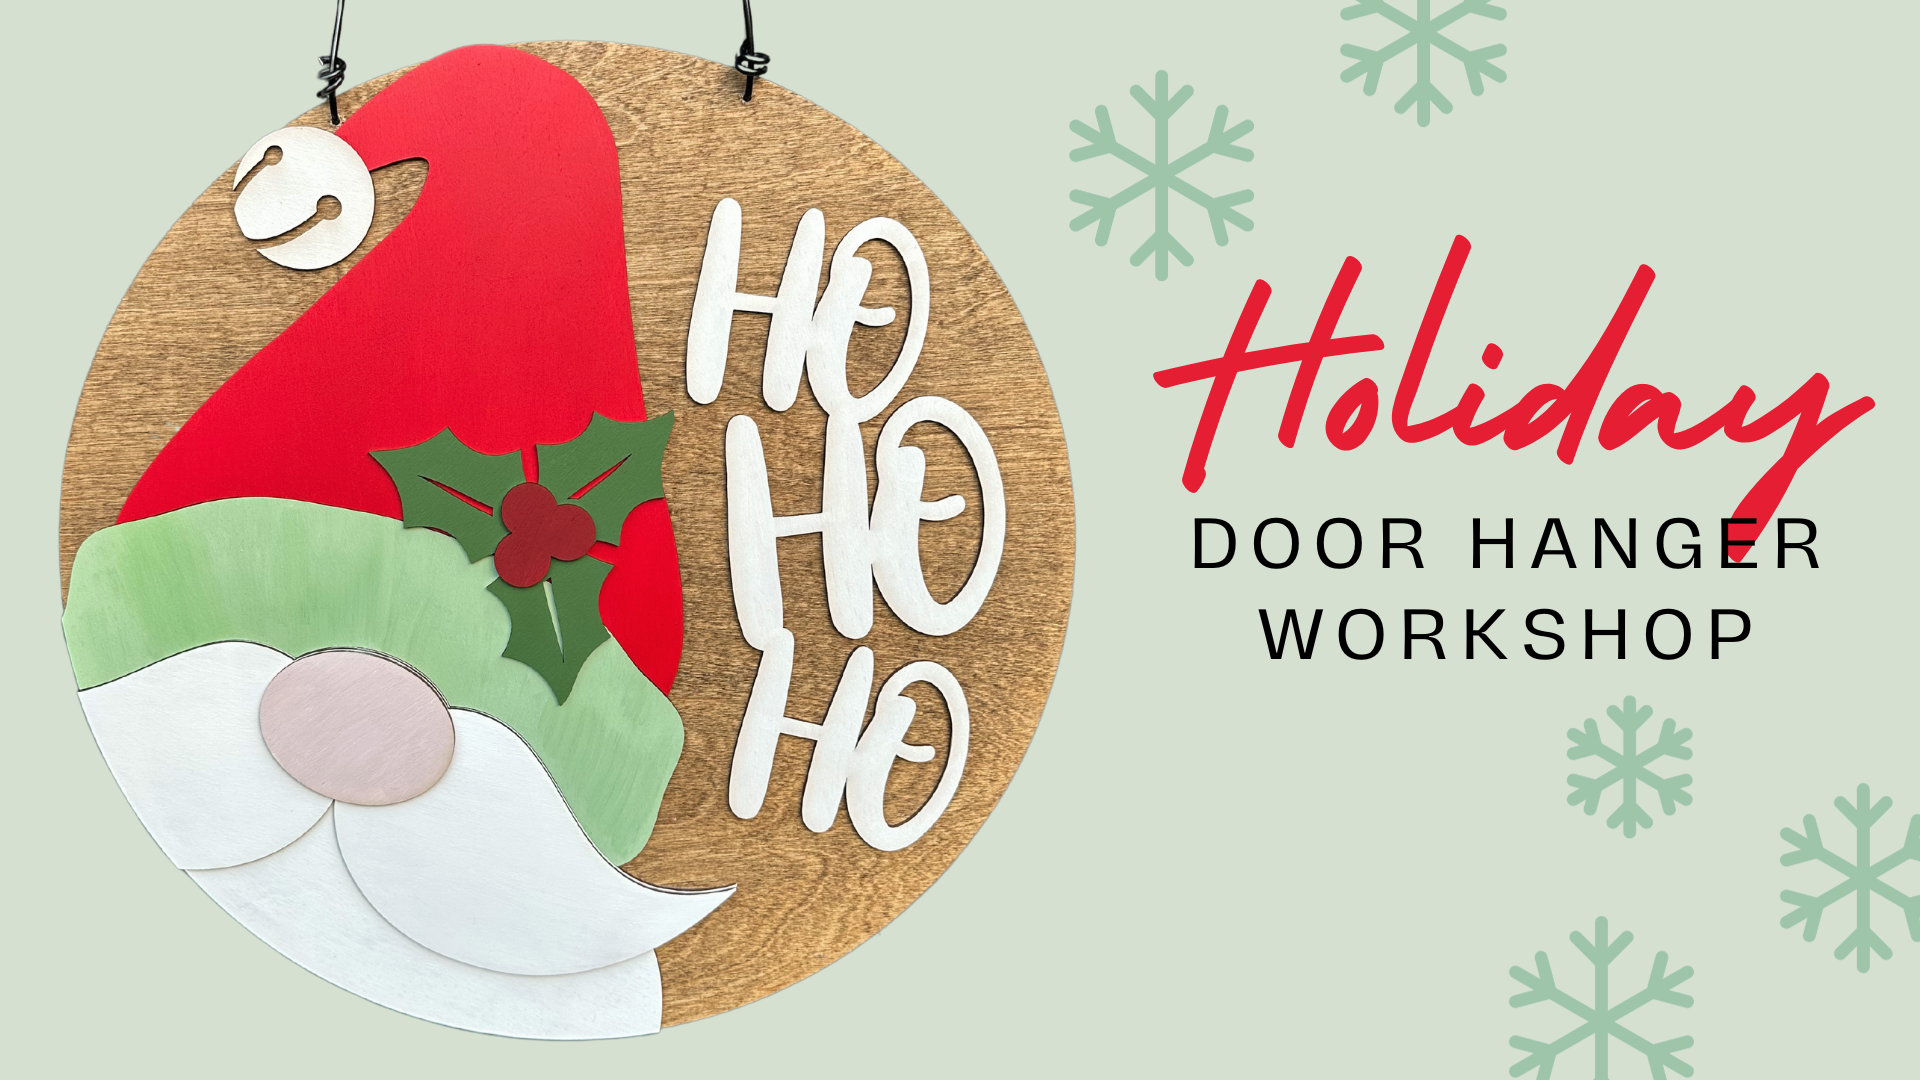 Holiday Door Hanger Workshop, Bliss Home at Westport Village